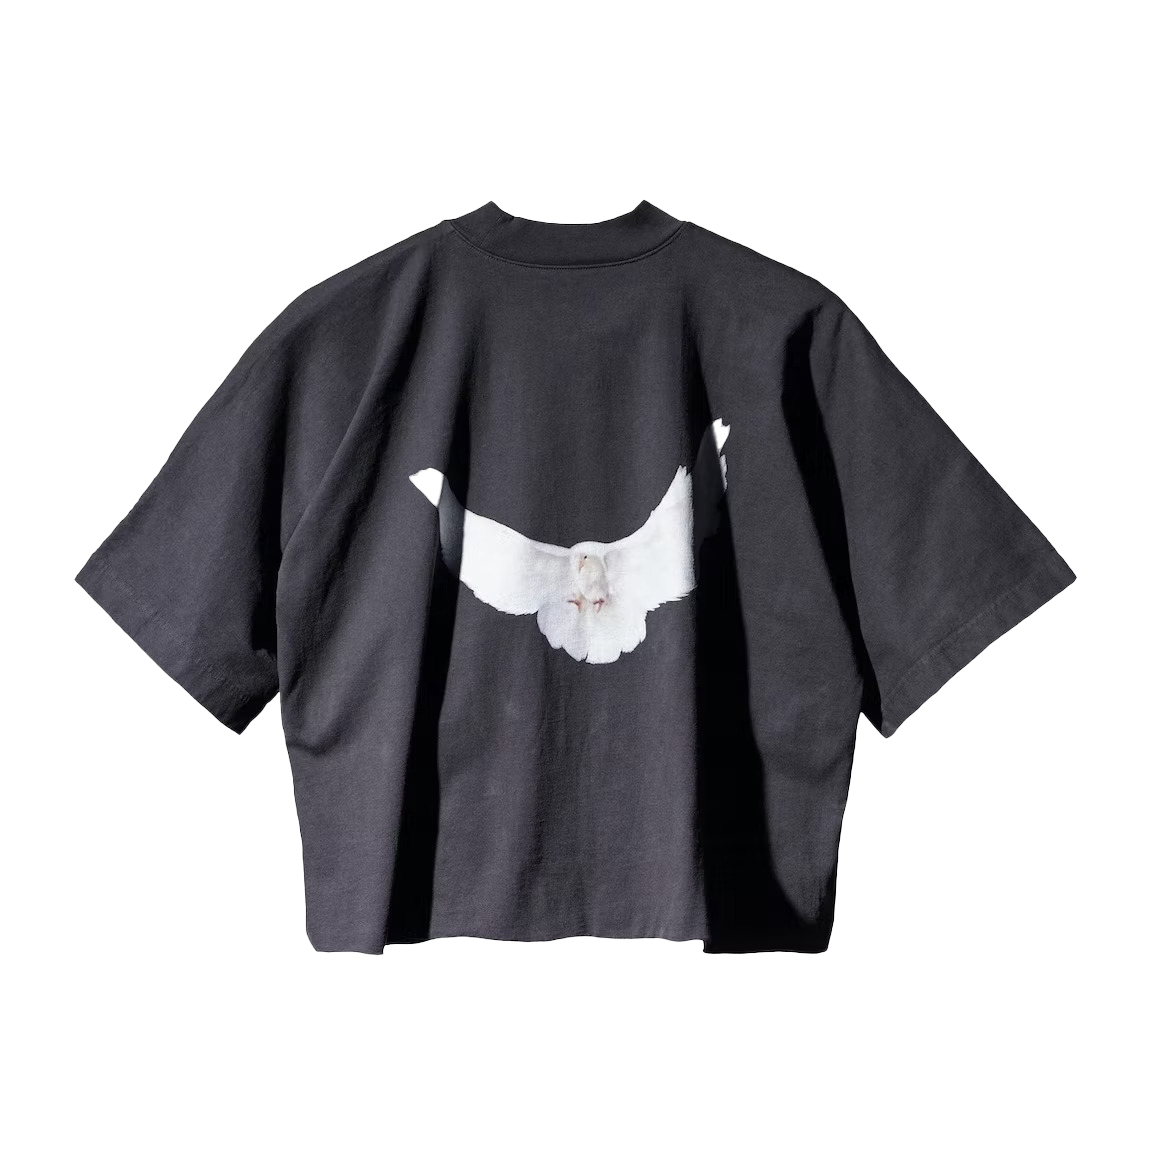 GAP x YZY - Camiseta Engineered by Balenciaga Dove no Seam